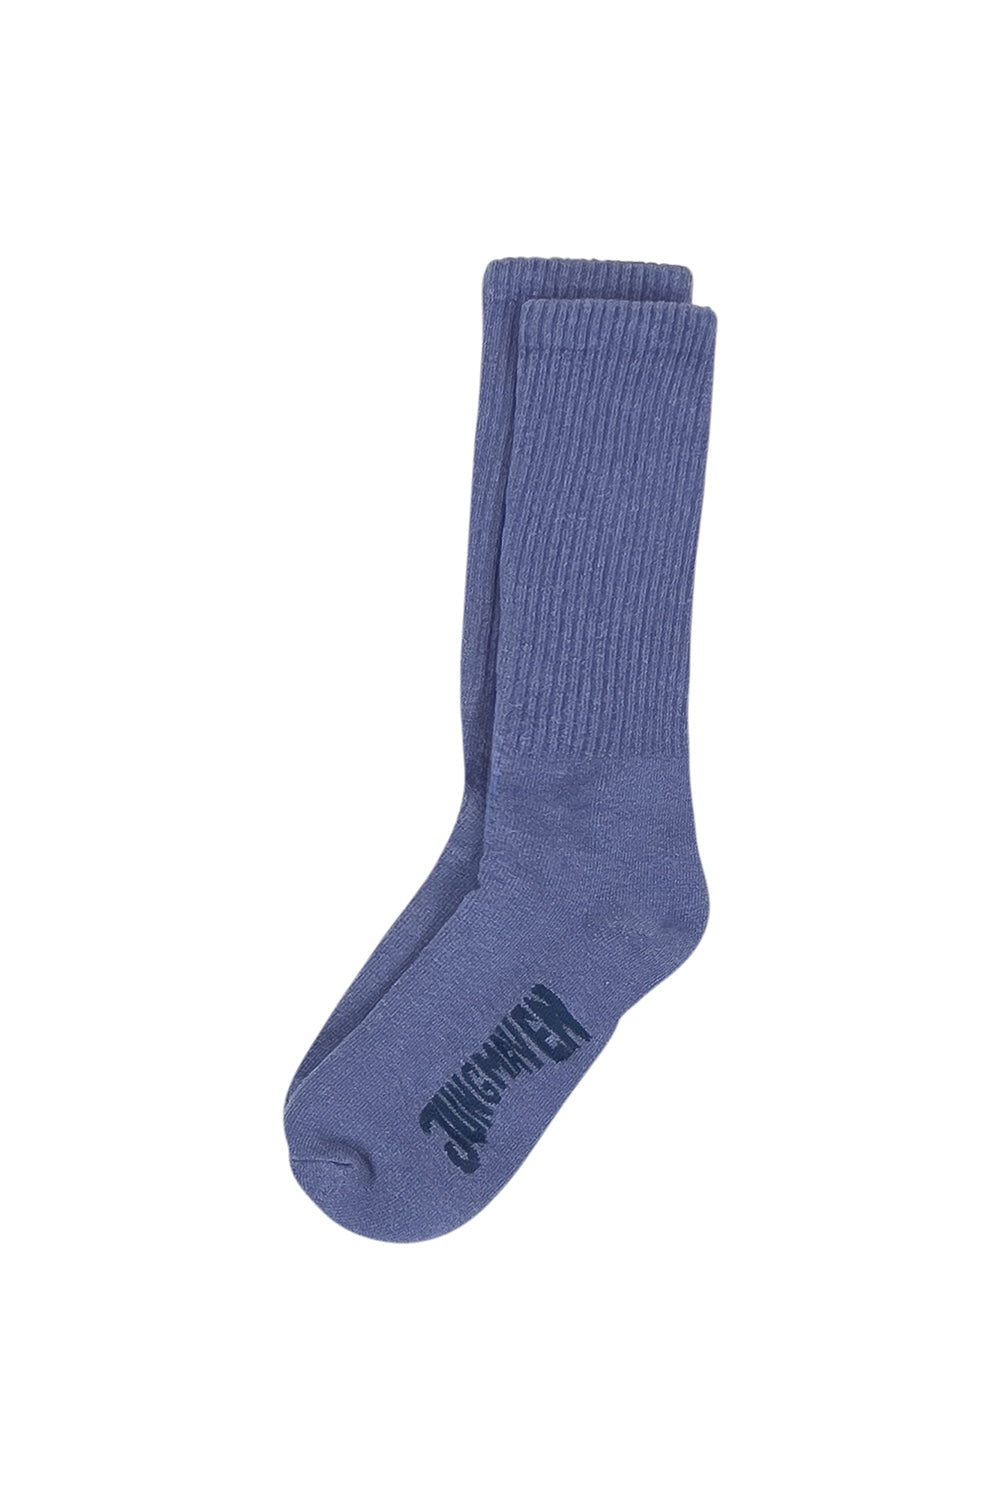 Hemp Wool Crew Socks | Jungmaven Hemp Clothing & Accessories / Color: Wisteria 